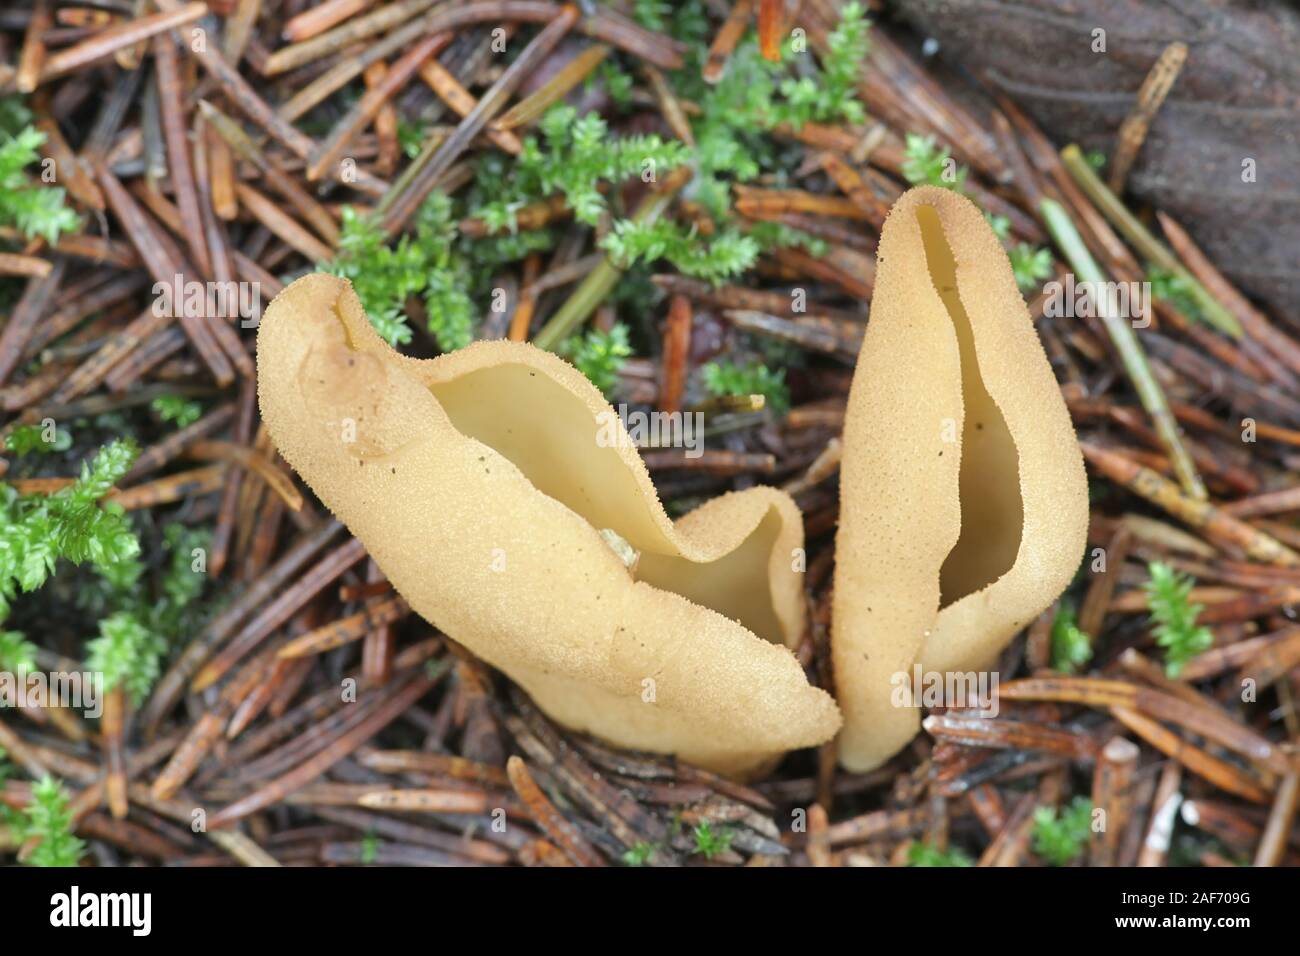 Otidea tuomikoskii, known as a Split goblet or rabbit ear fungus, wild fungi from Finland Stock Photo